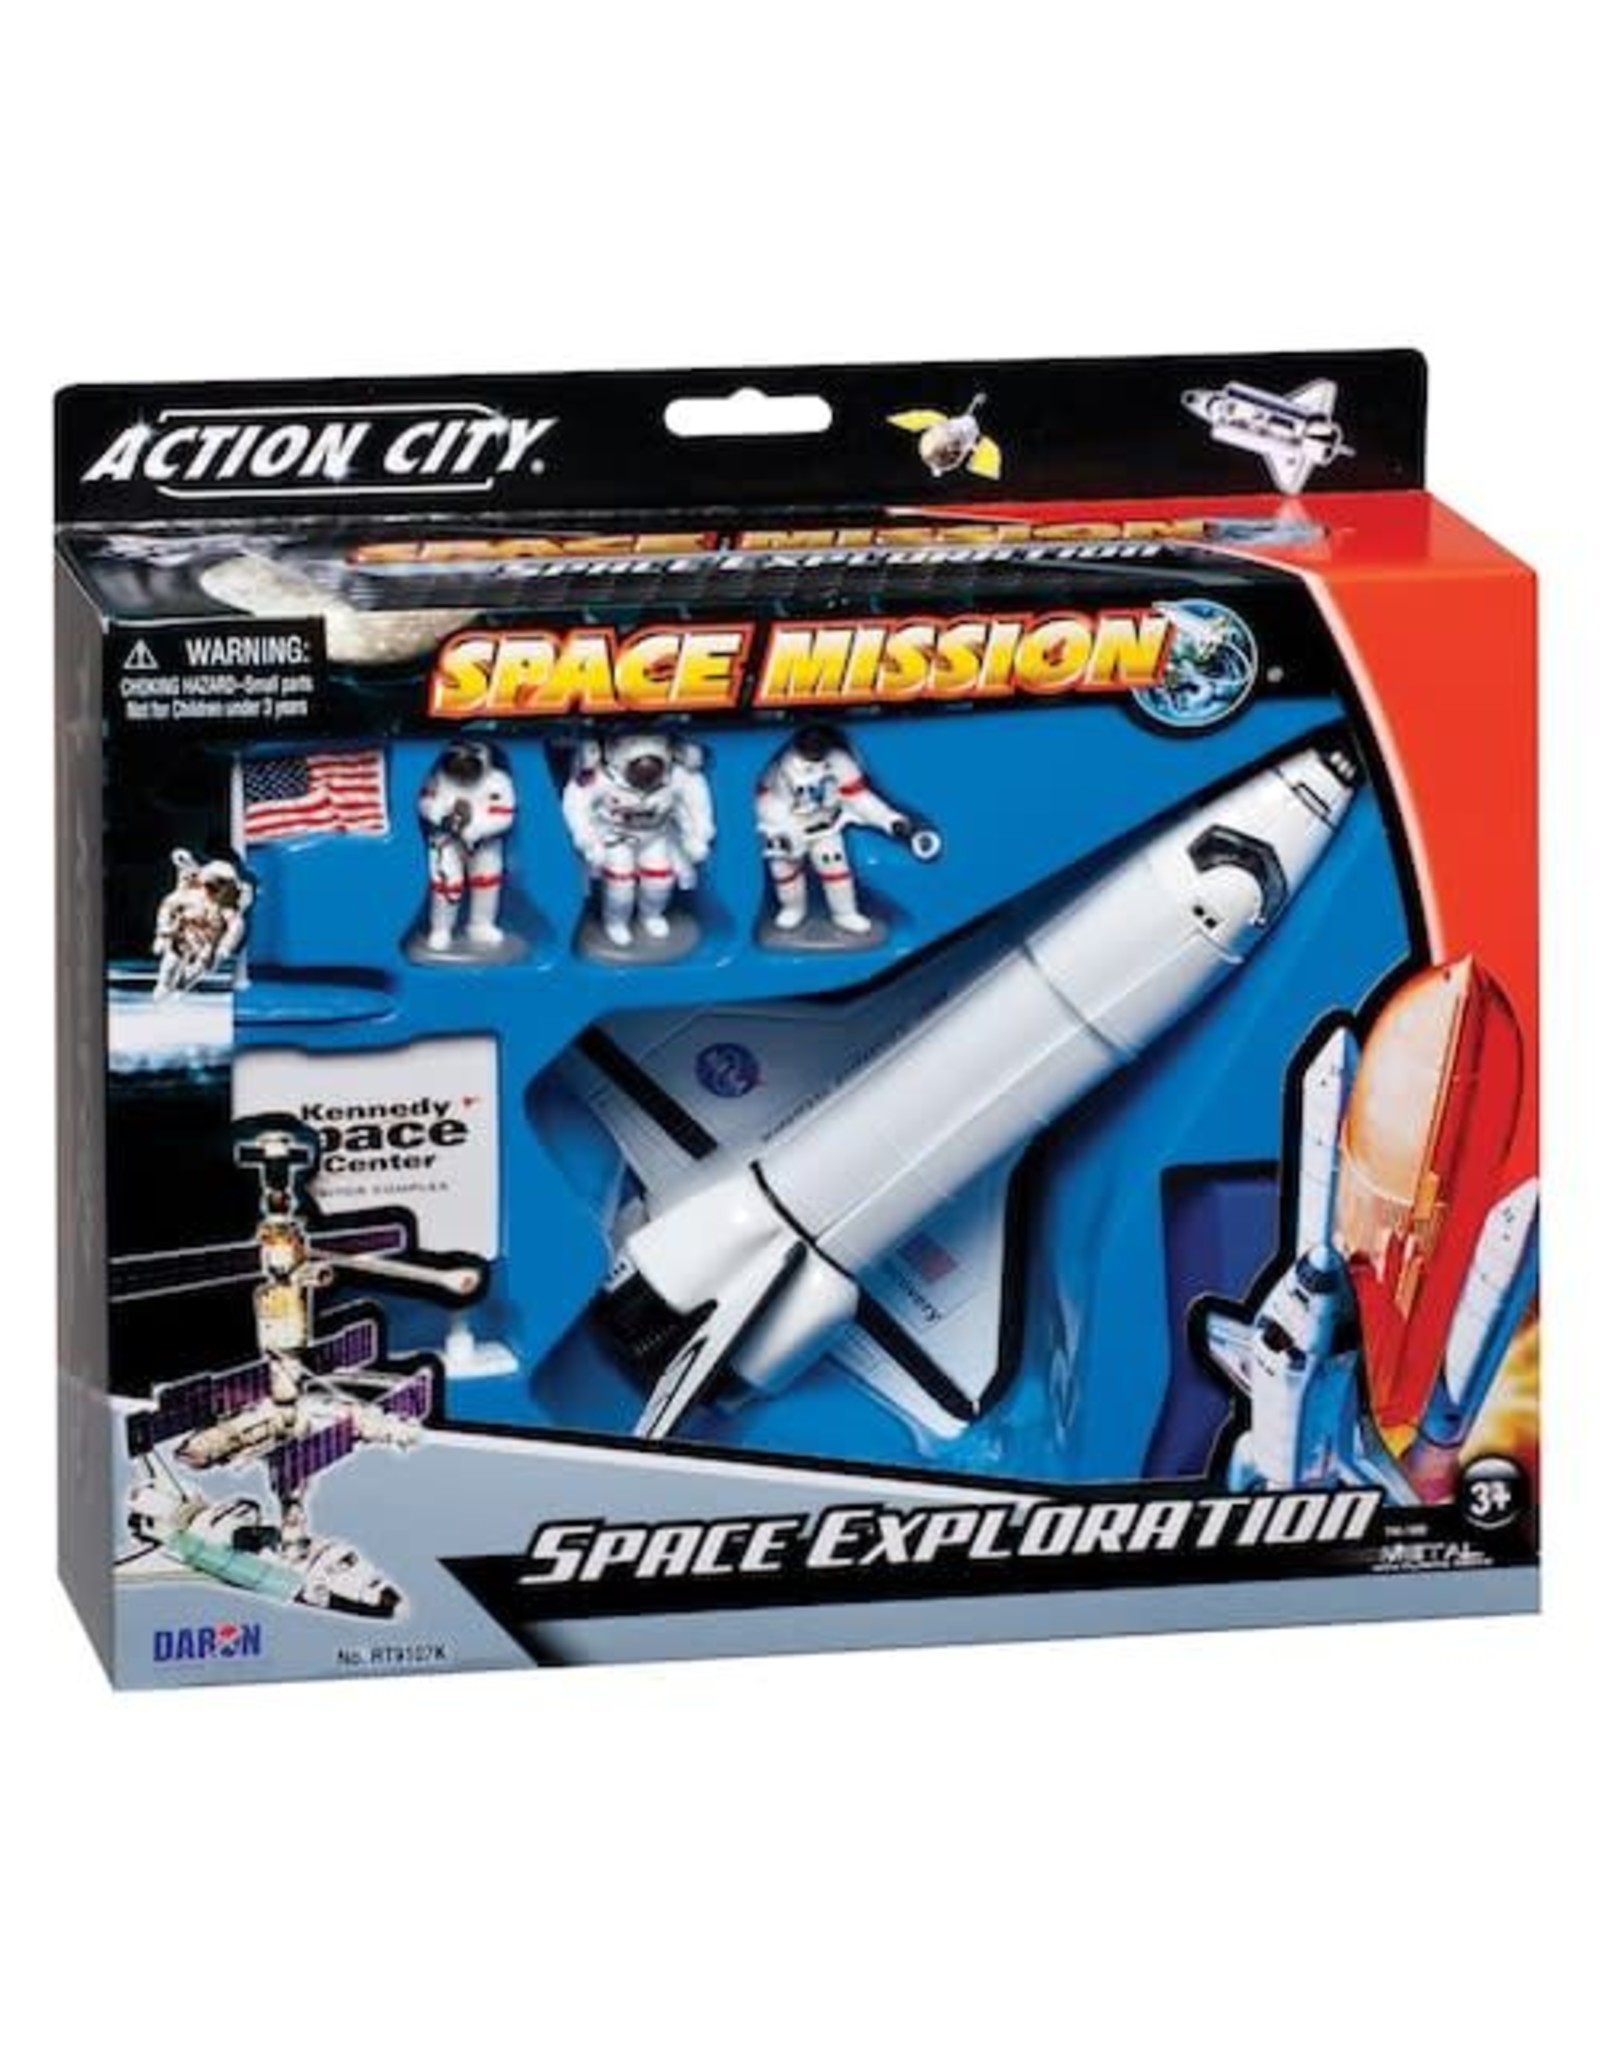 Action City Space Exploration Kit